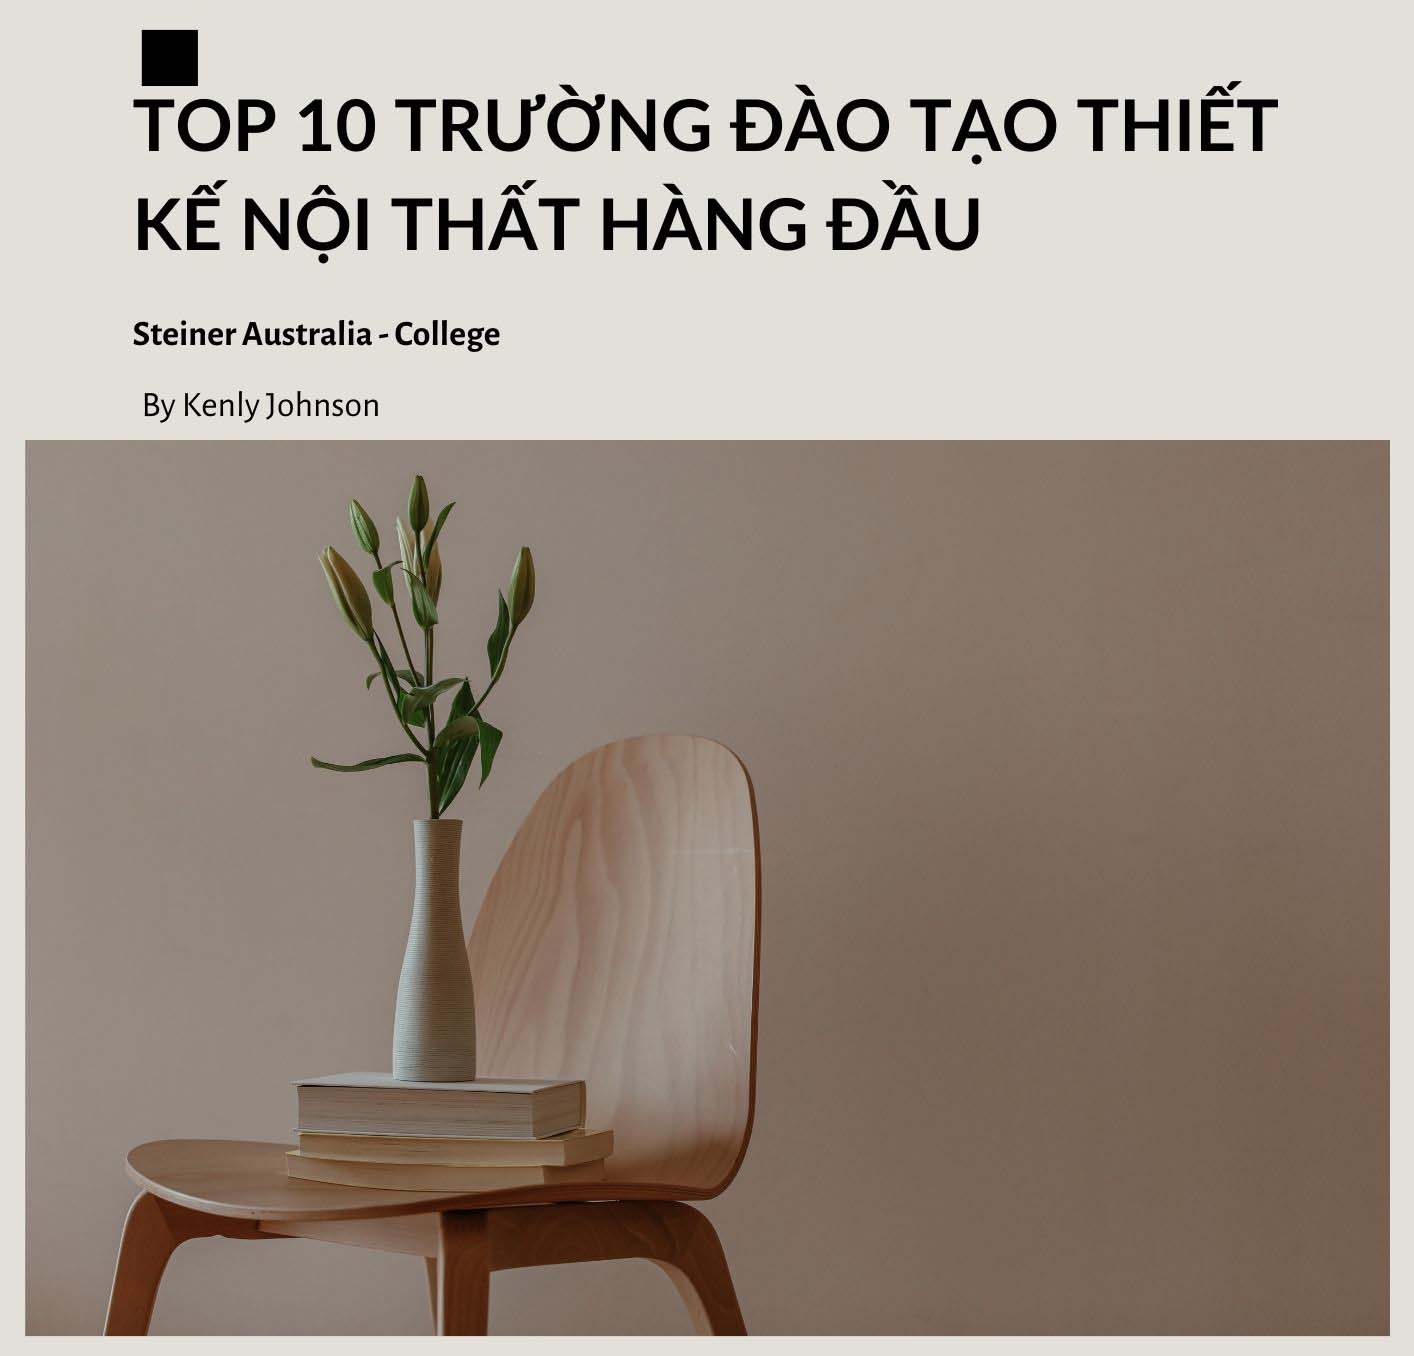 Top 10 khoa hoc thiet ke noi that tai viet nam